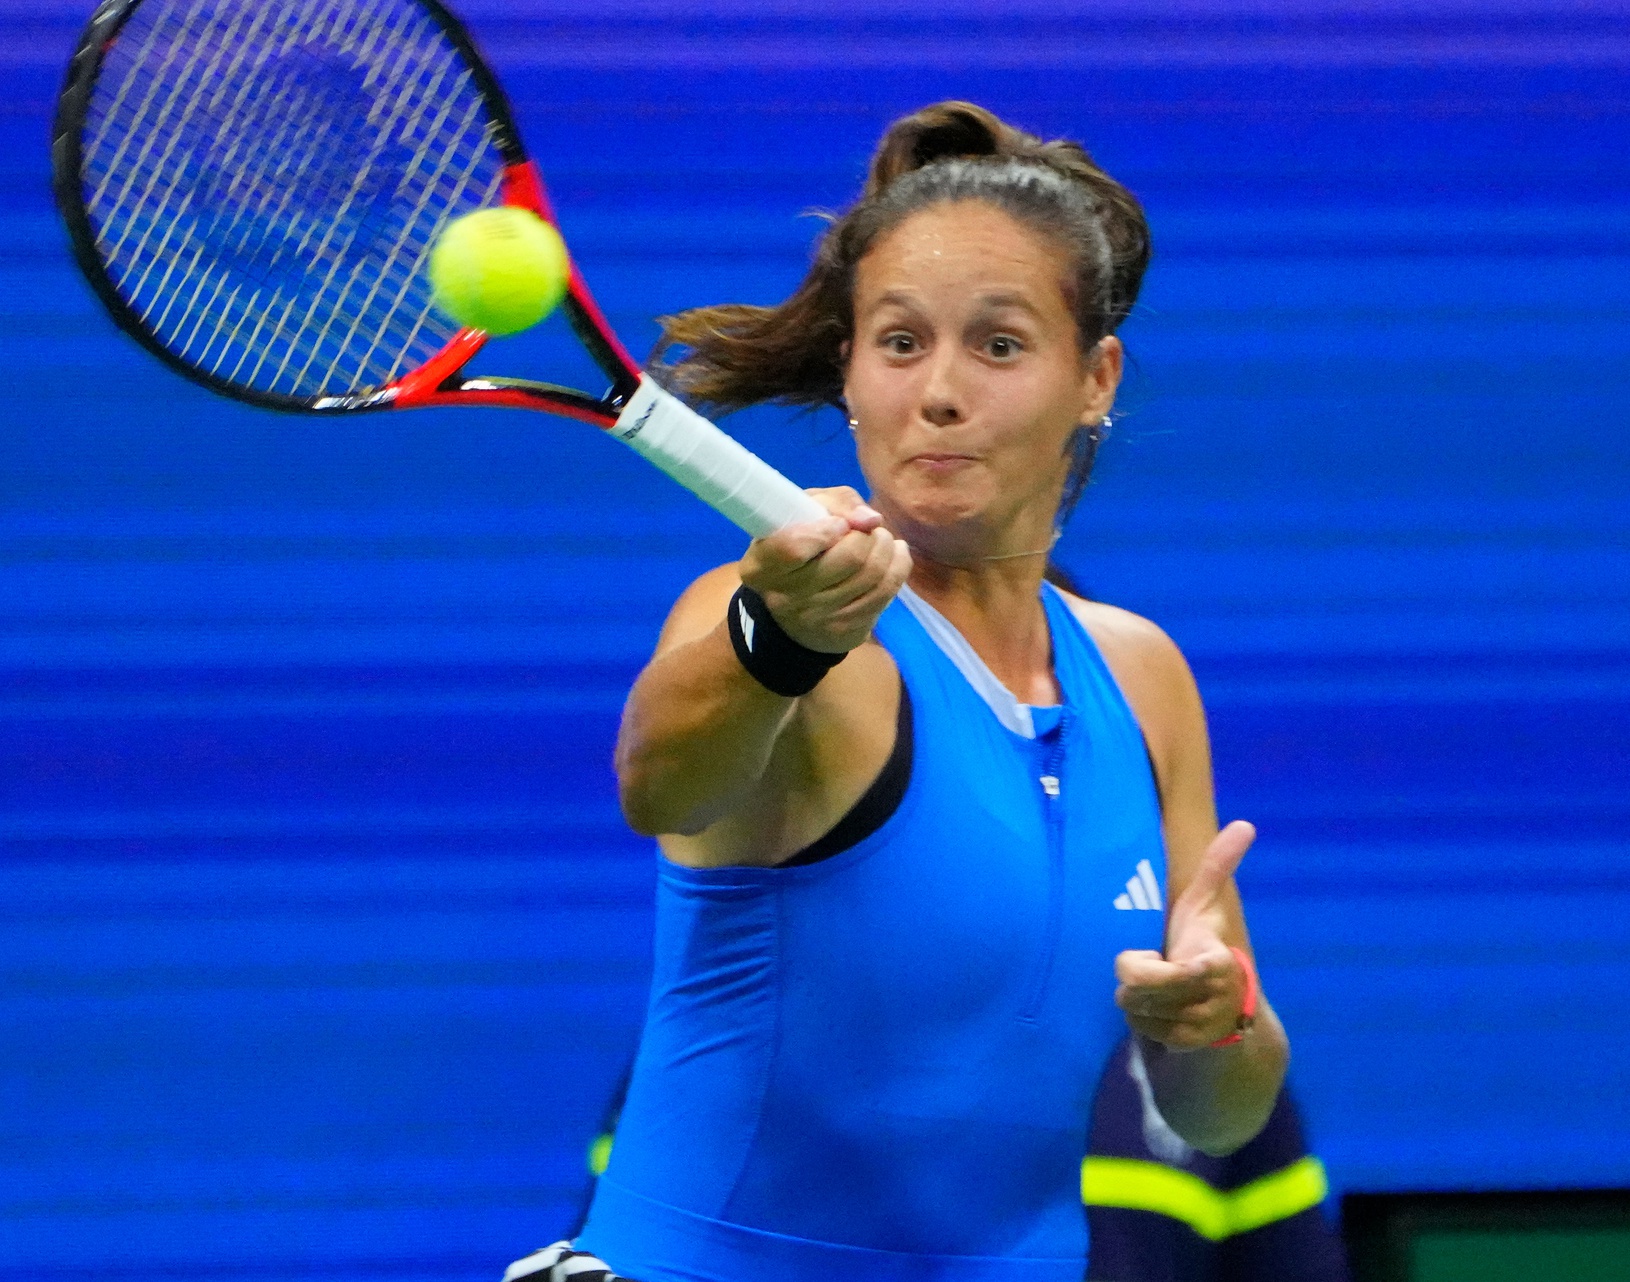 Daria Kasatkina in action ahead of the WTA Dubai Tennis Championships.